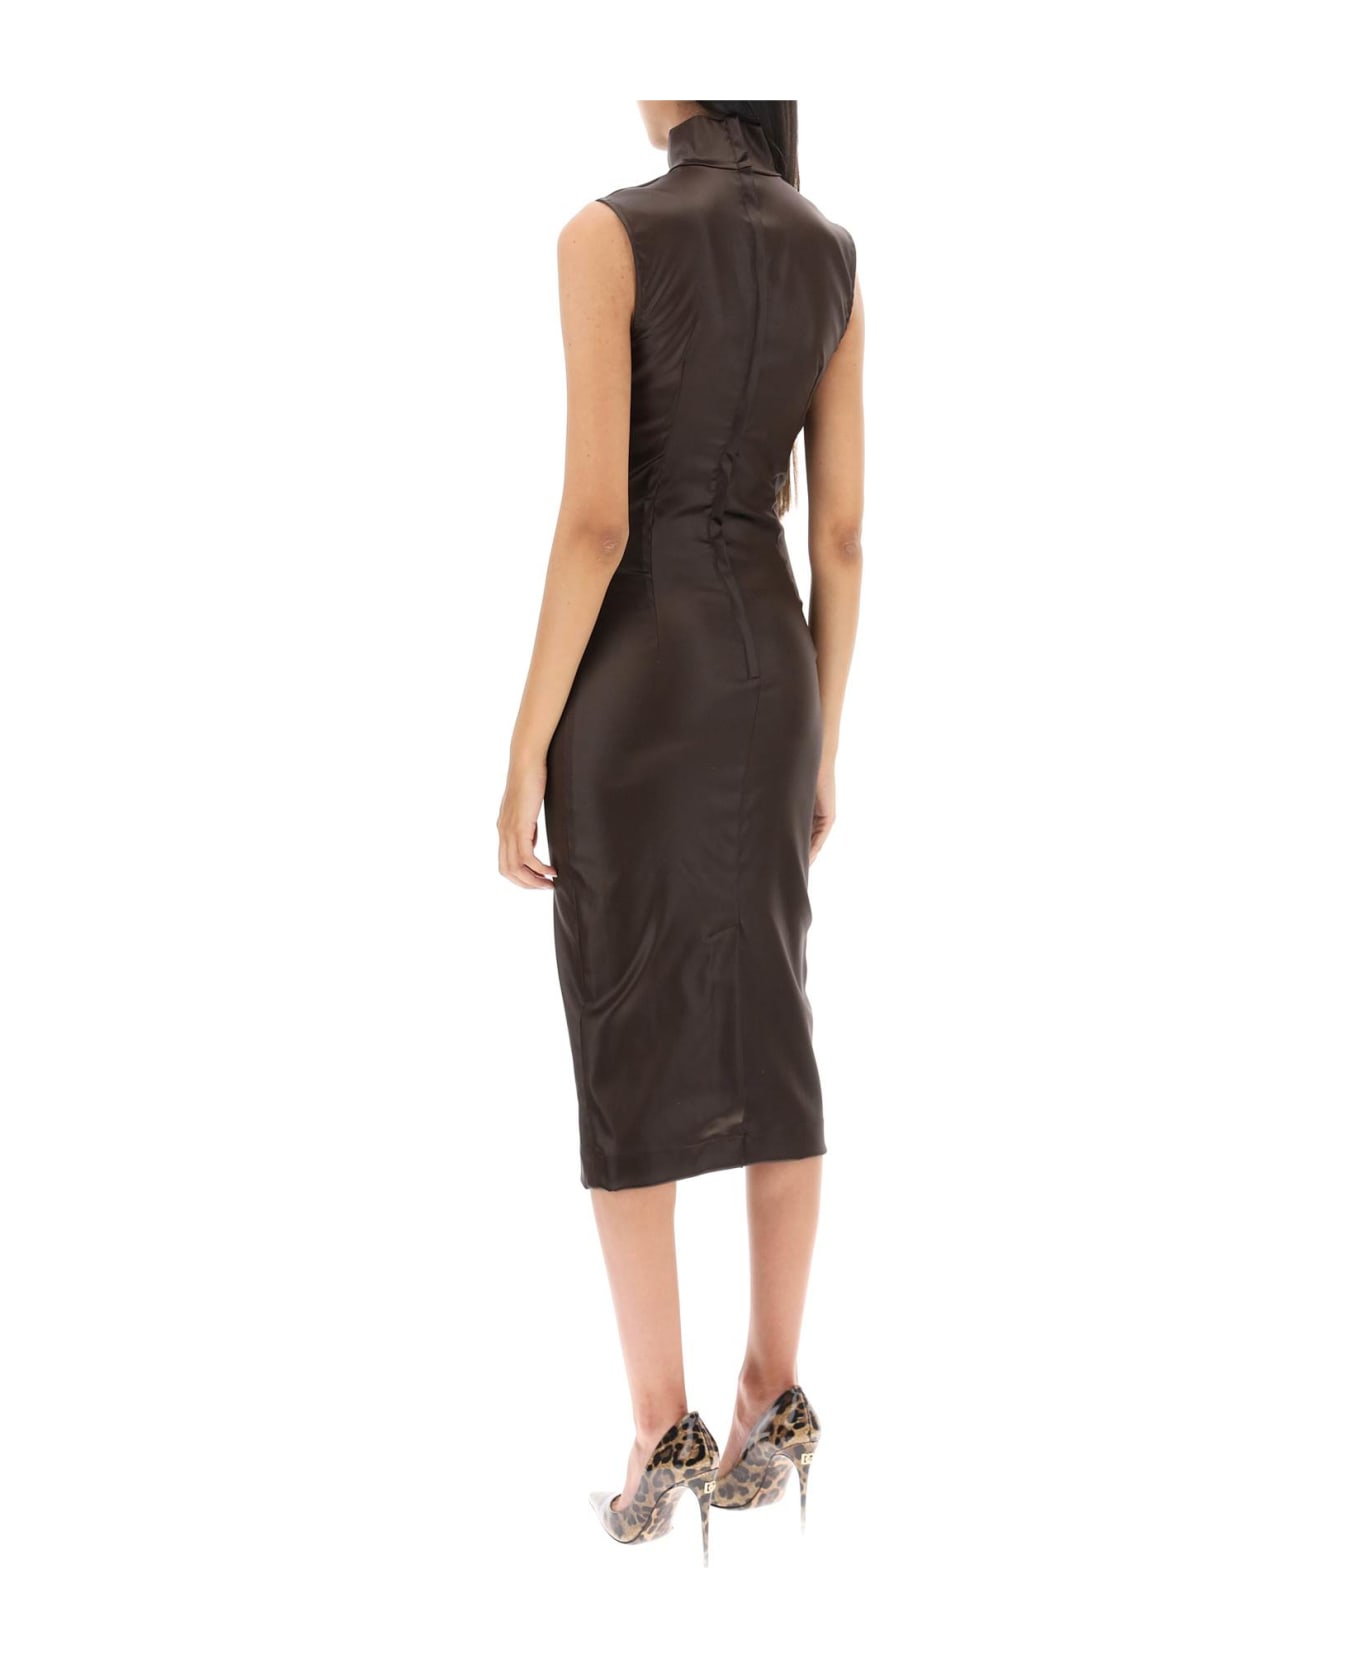 Dolce & Gabbana Sleeveless Midi Dress - MARRONE SCURO 4 (Brown)